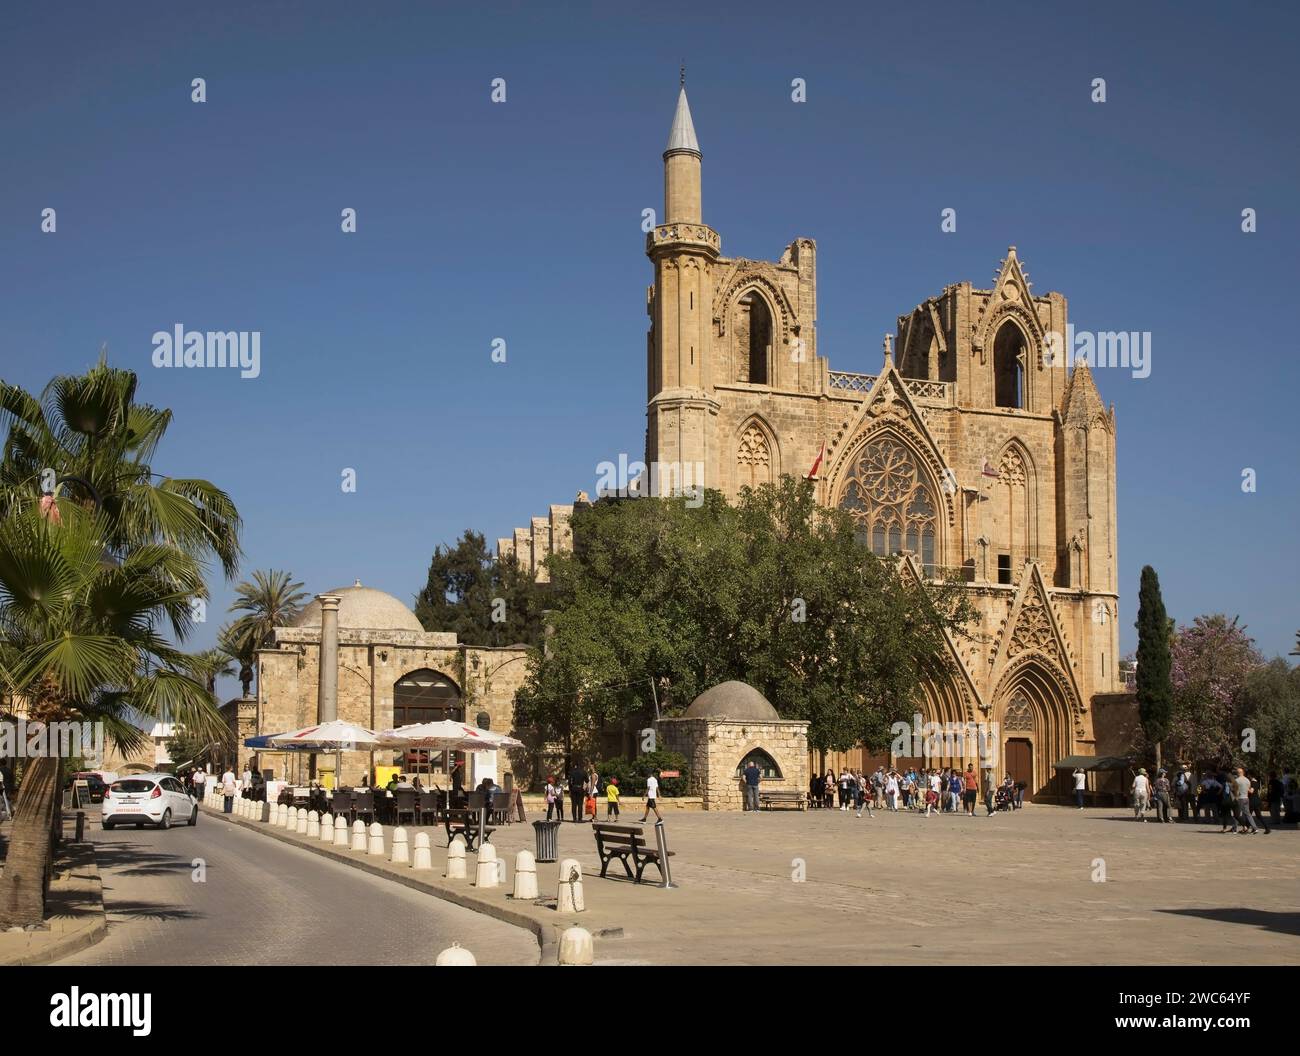 Moschea Lala Mustafa Pasha - Cattedrale di San Nicola in piazza Namik Kemal a Famagosta. Cipro Foto Stock